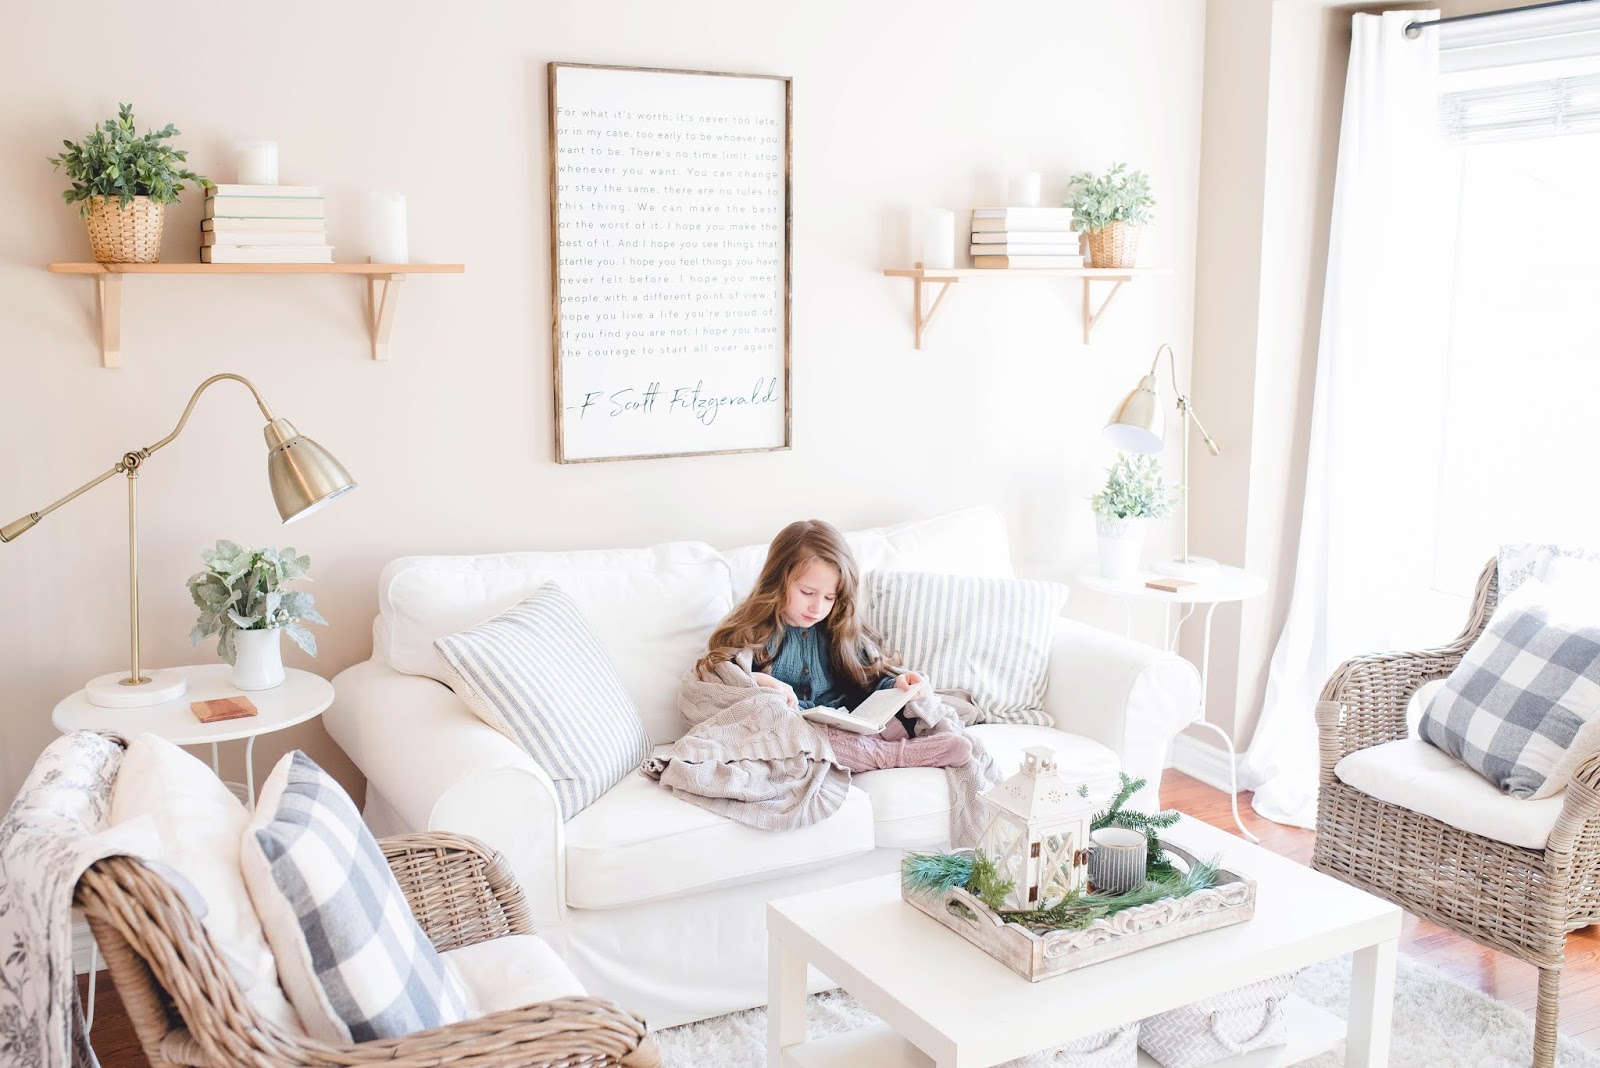 25 Best Living Room Ideas - Stylish Living Room Decorating: Interior